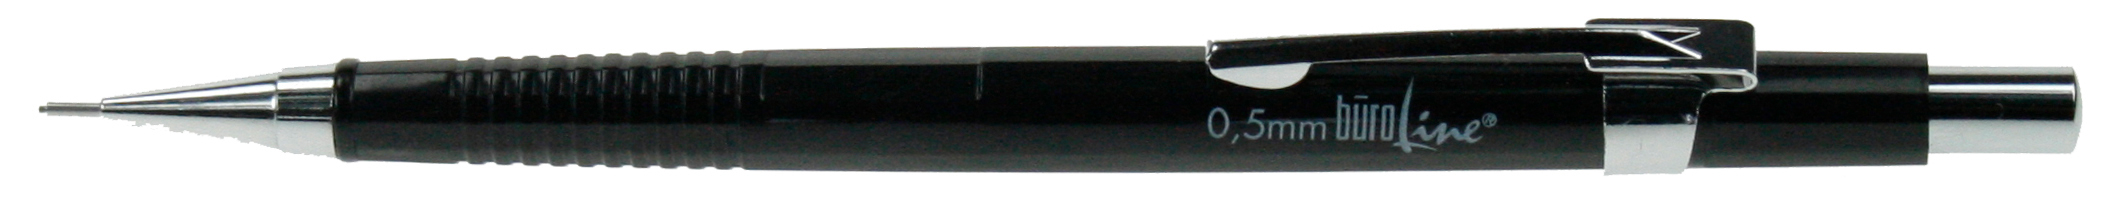 BÜROLINE Porte-mines 0,5mm 254265 noir noir